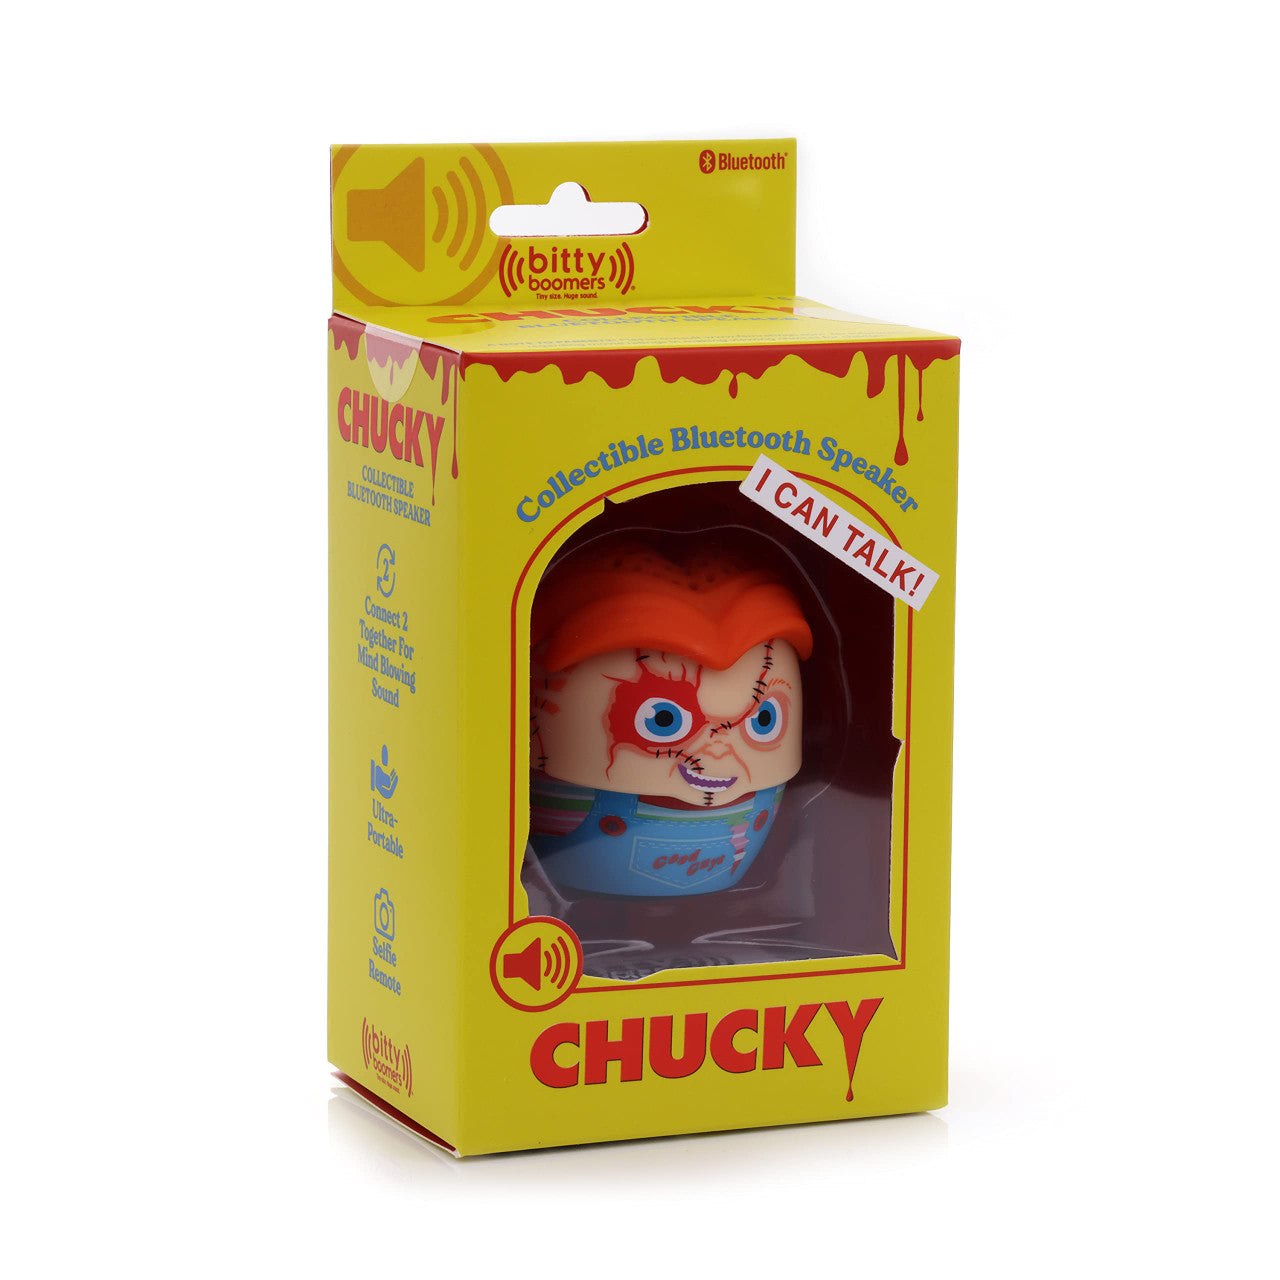 Bitty Boomers Chucky - Mini Bluetooth Speaker